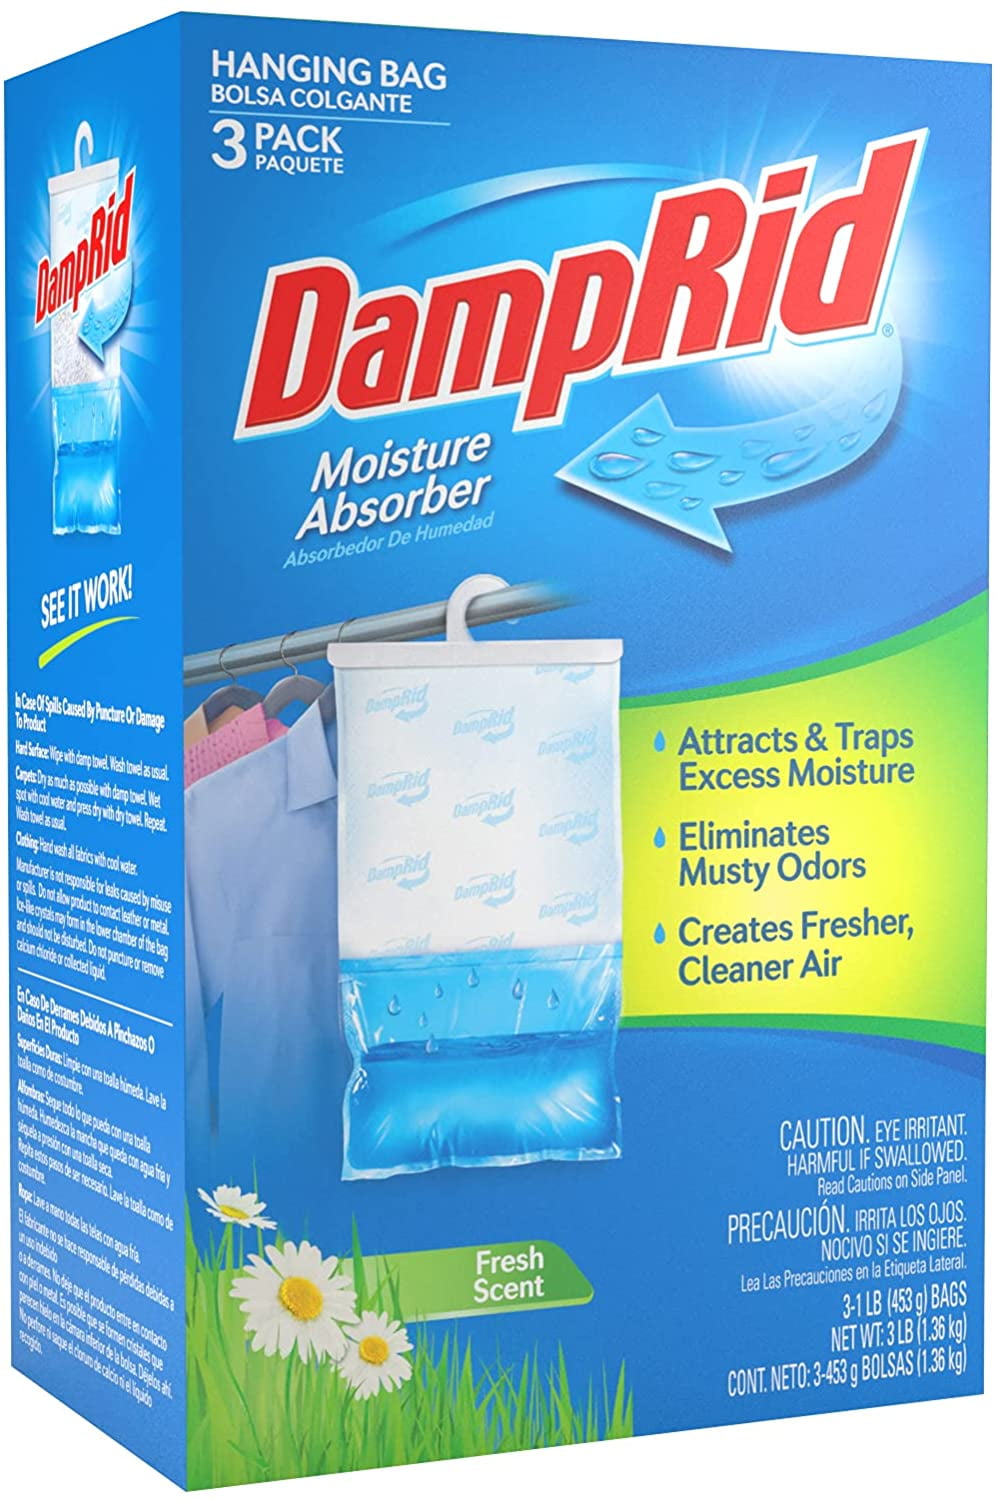  DampRid Hanging Bag, Moisture Absorber, 1 box of 3